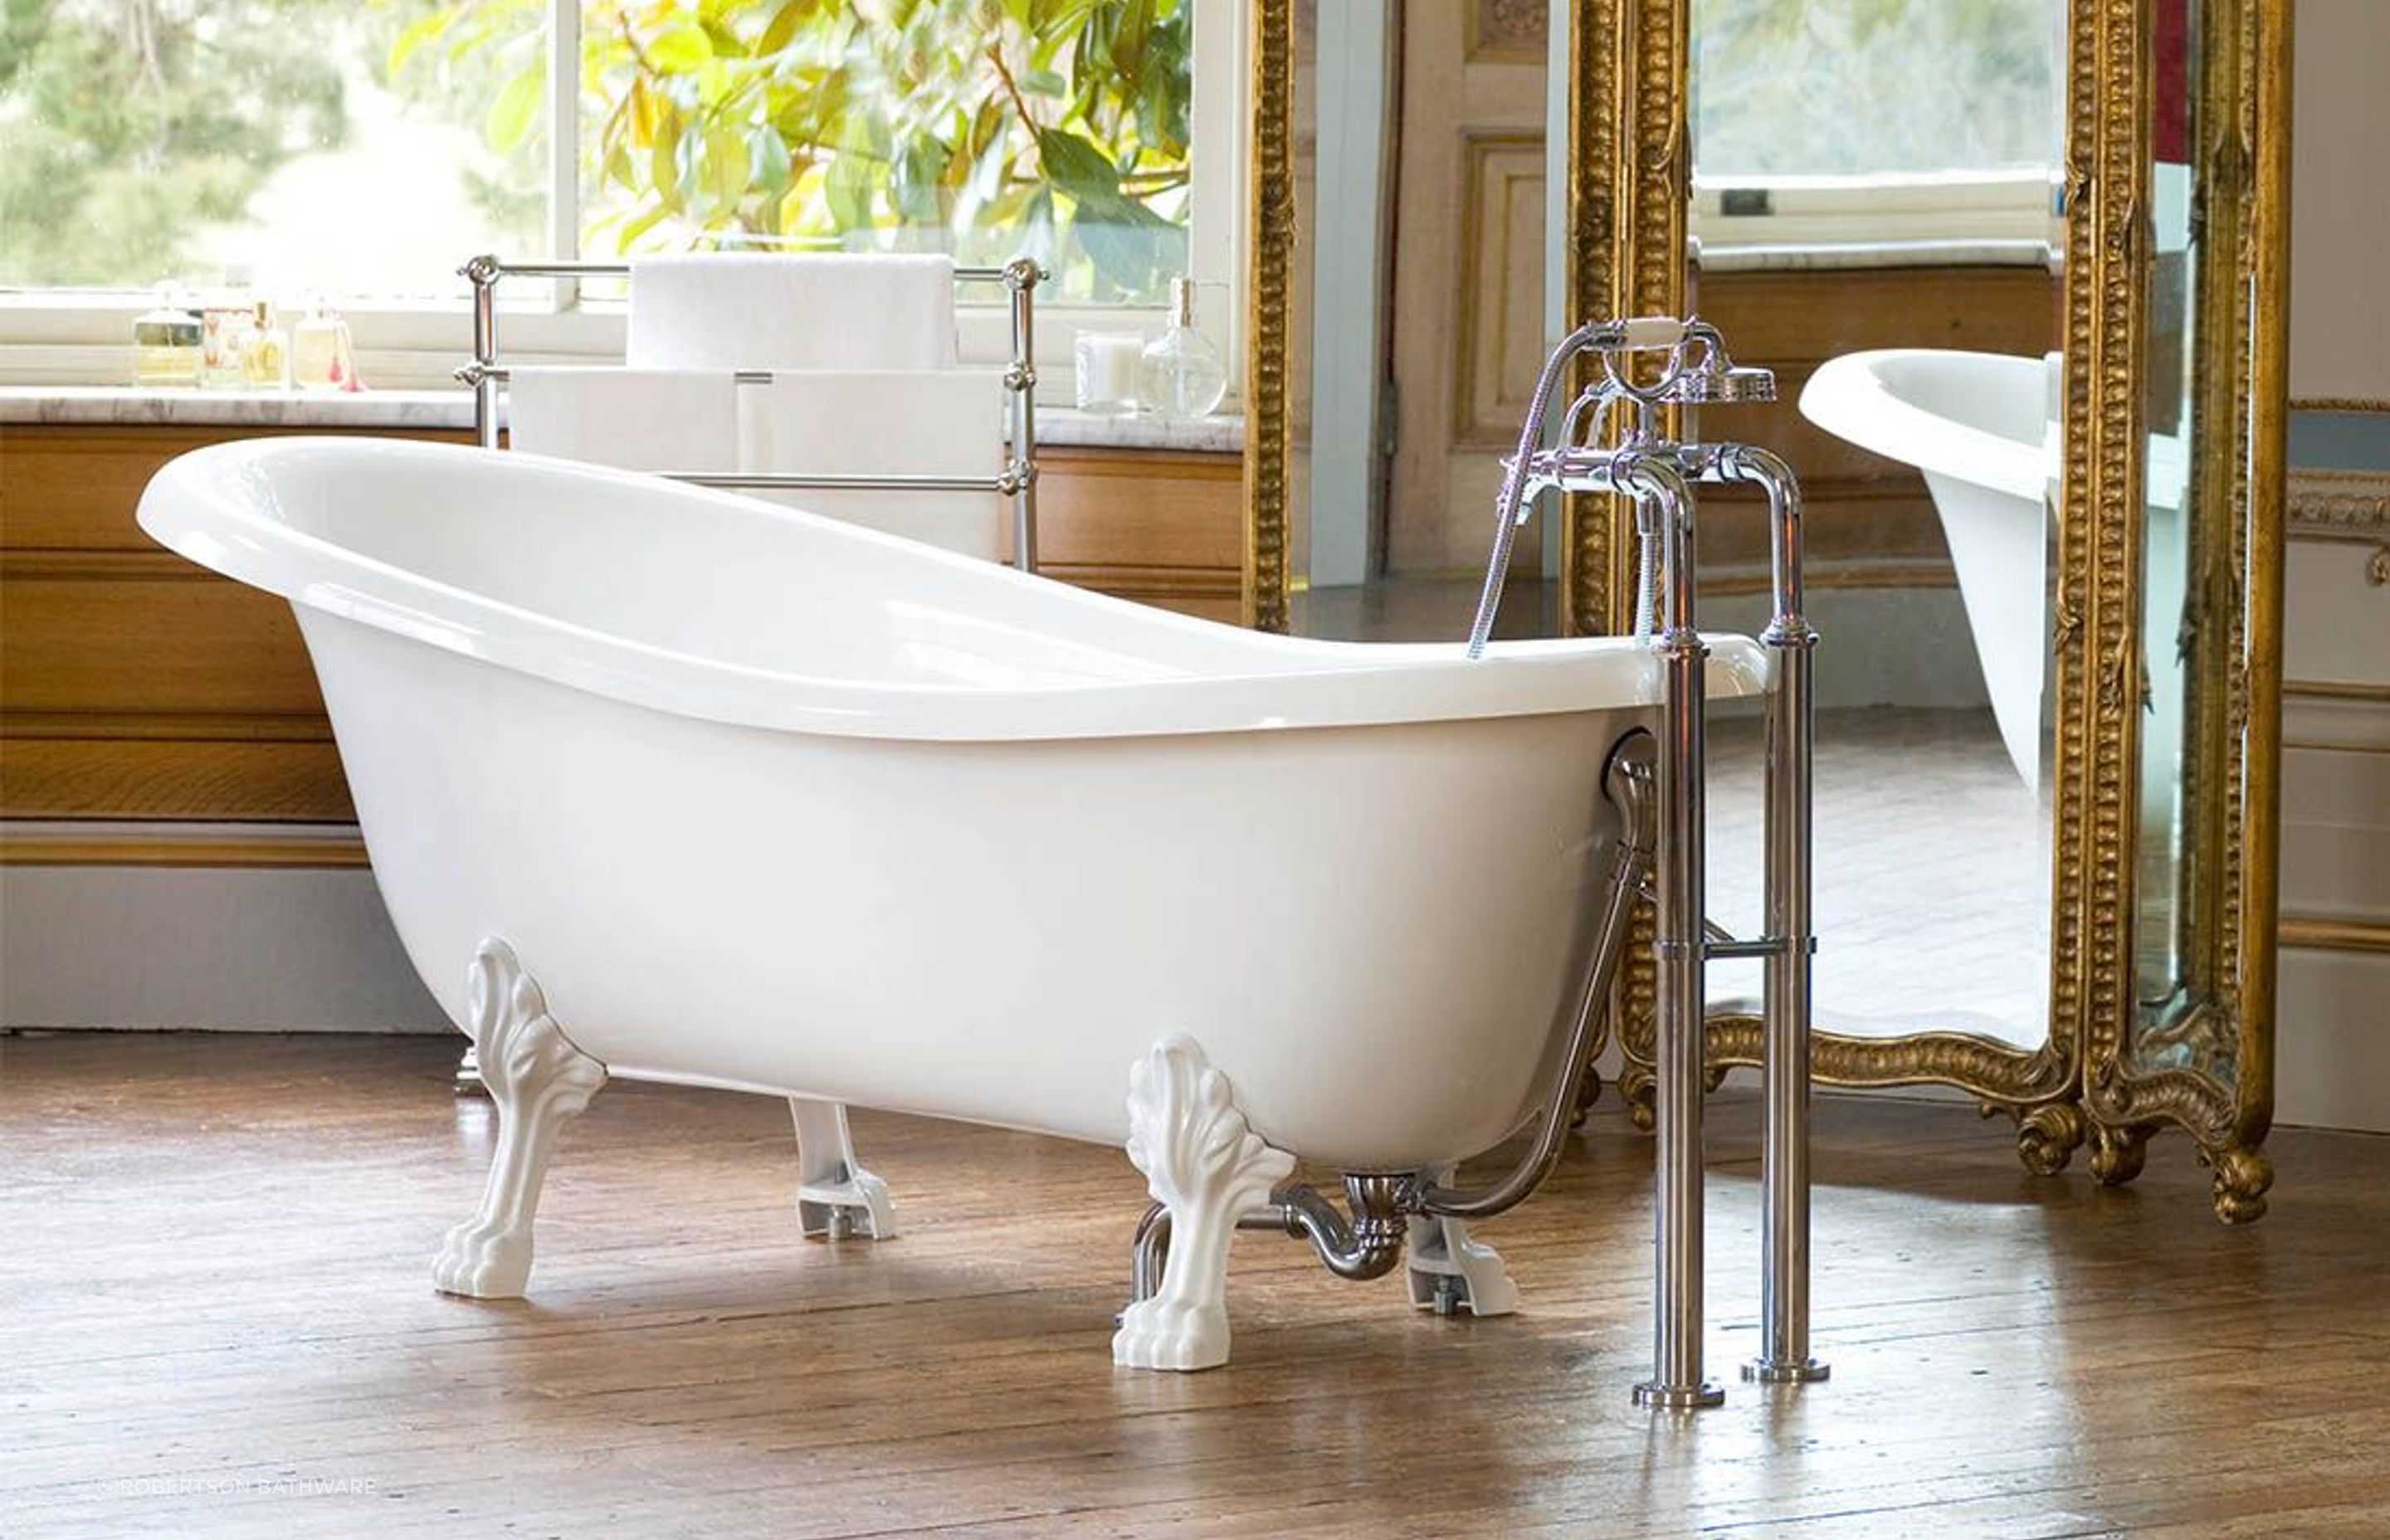 The Roxburgh Quarrycast bath embodies classic Victorian style.